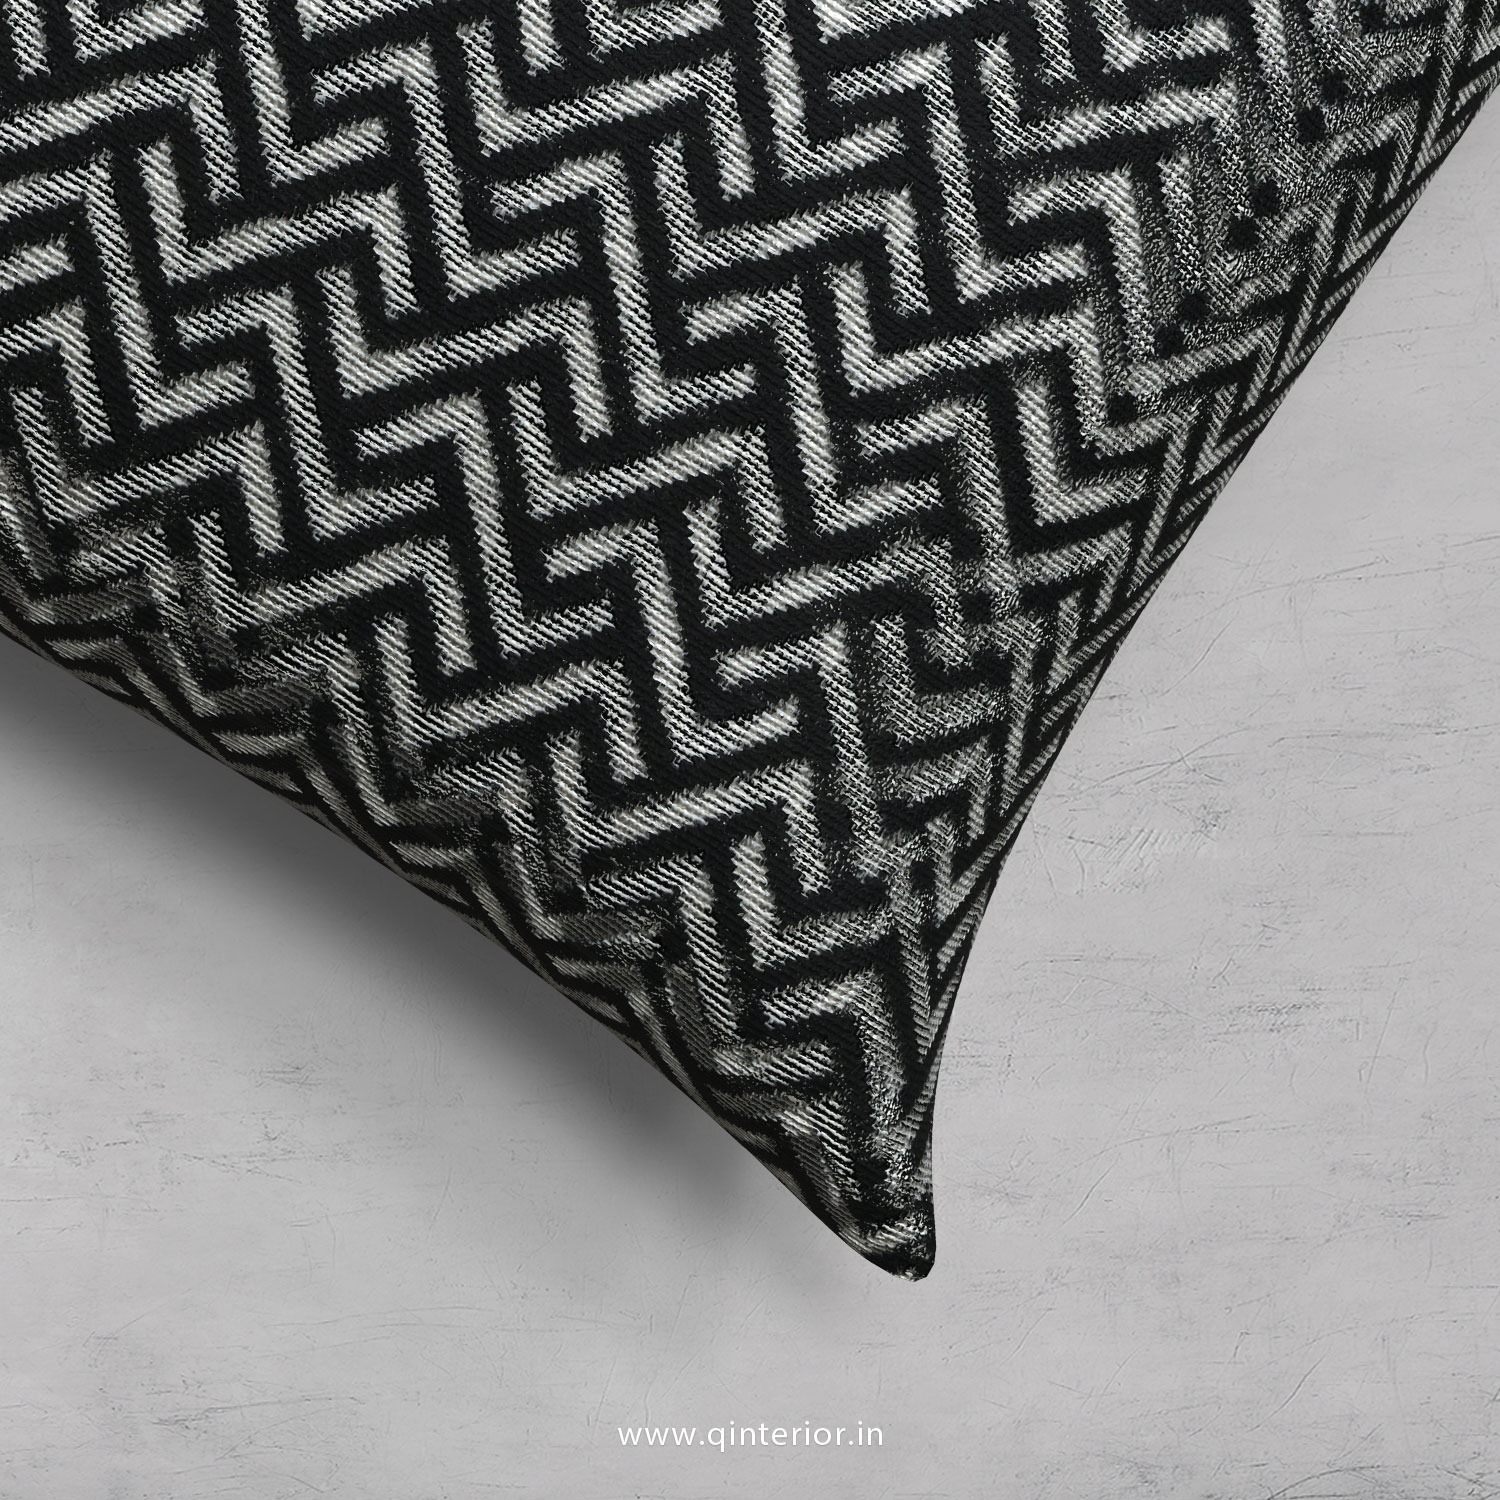 Black Zigzag Cushion With Cushion Cover - CUS001 JQ